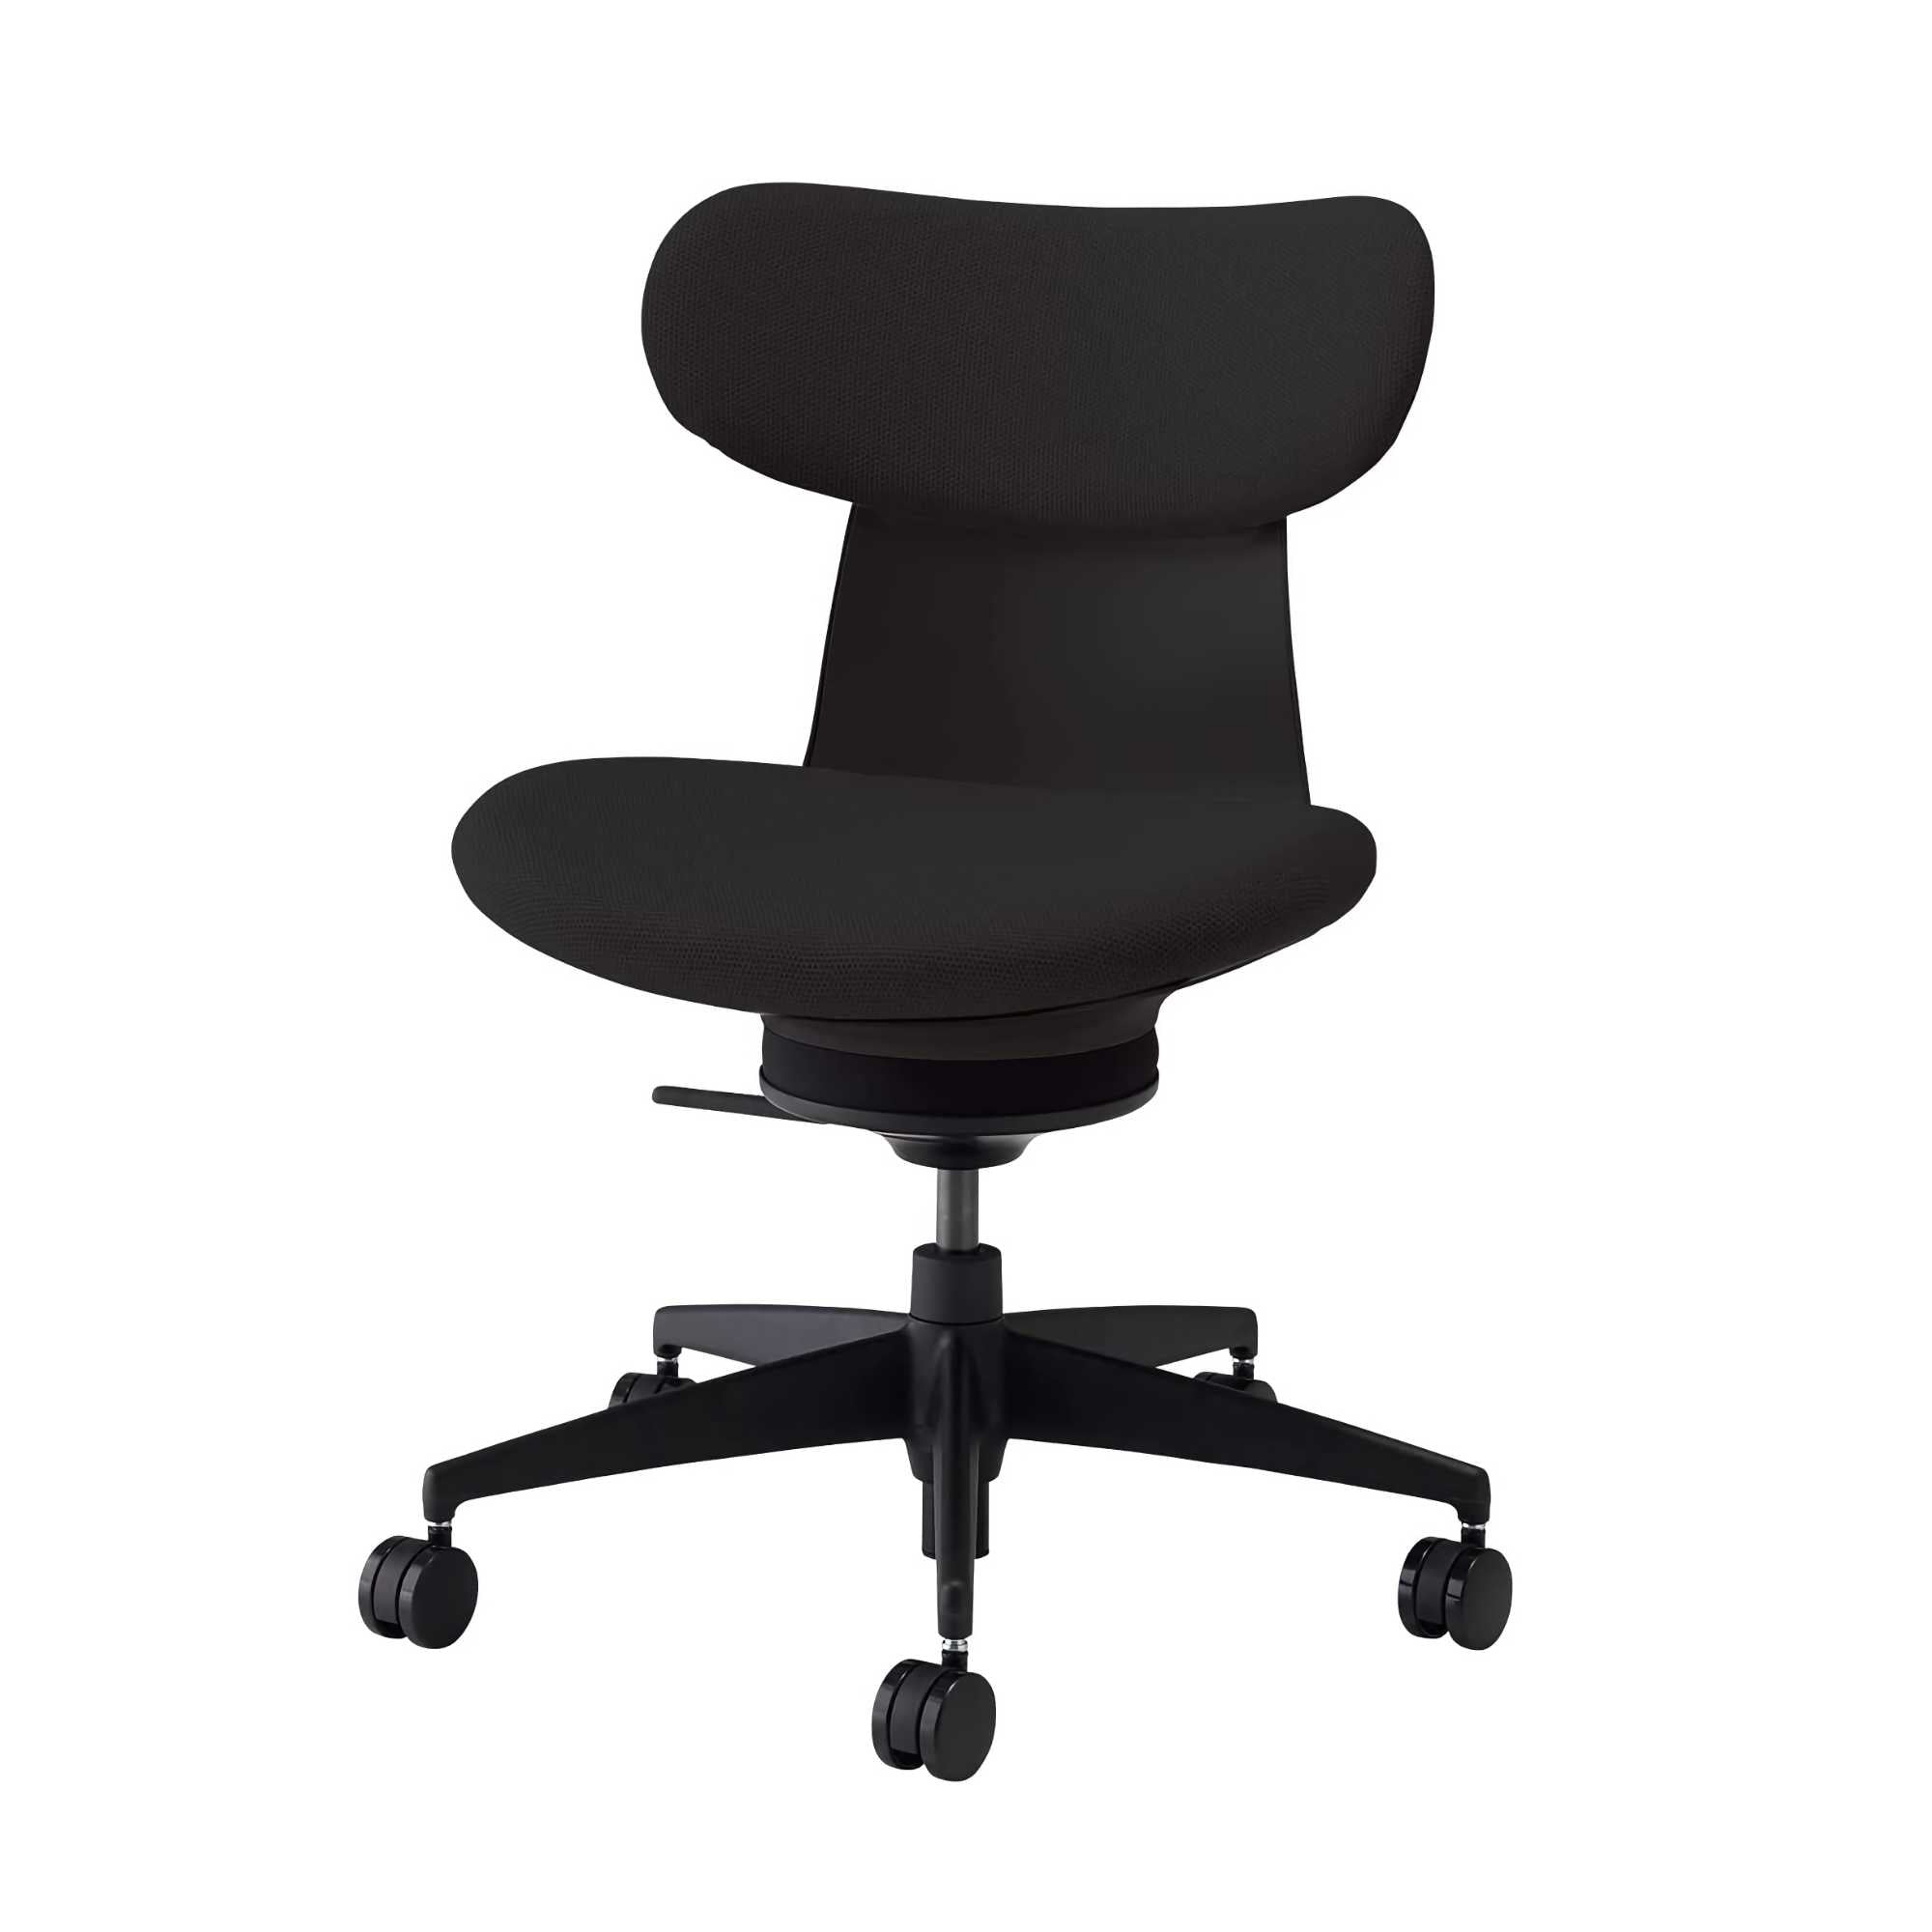 Kokuyo Inglife Office Chair Upholstery Back, black